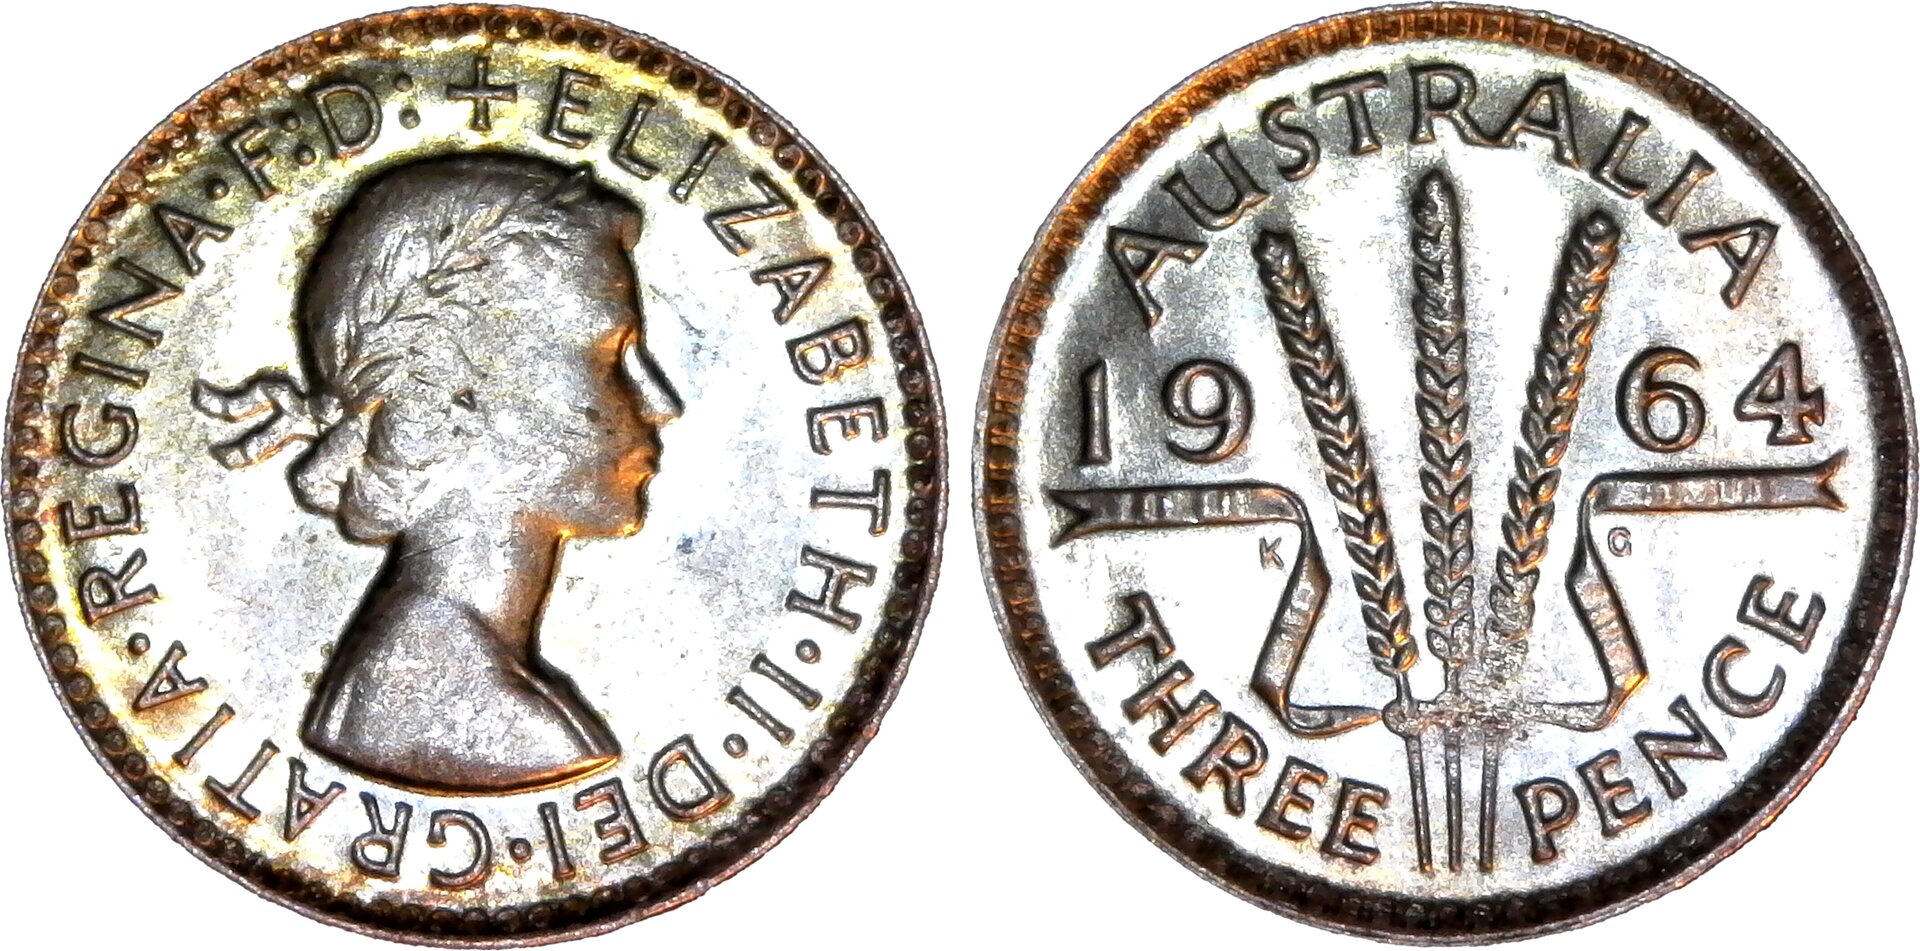 Australia Three pence 1964 obv-side-cutout.jpg